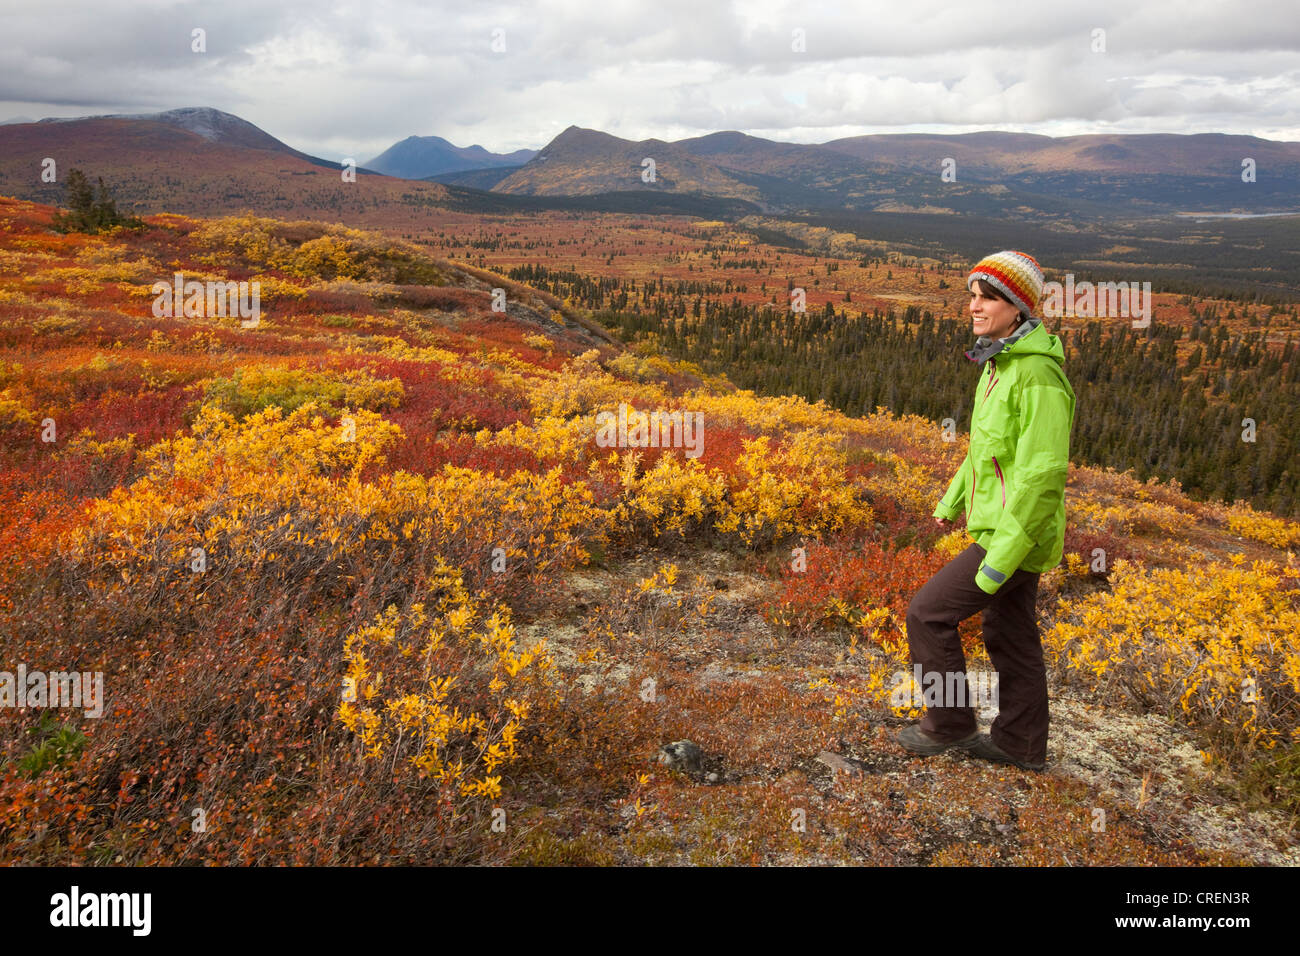 Junge Frau, Wandern, Wandern in subalpinen Tundra, Indian Summer, Herbst, in der Nähe von Fish Lake, Yukon Territorium, Kanada Stockfoto